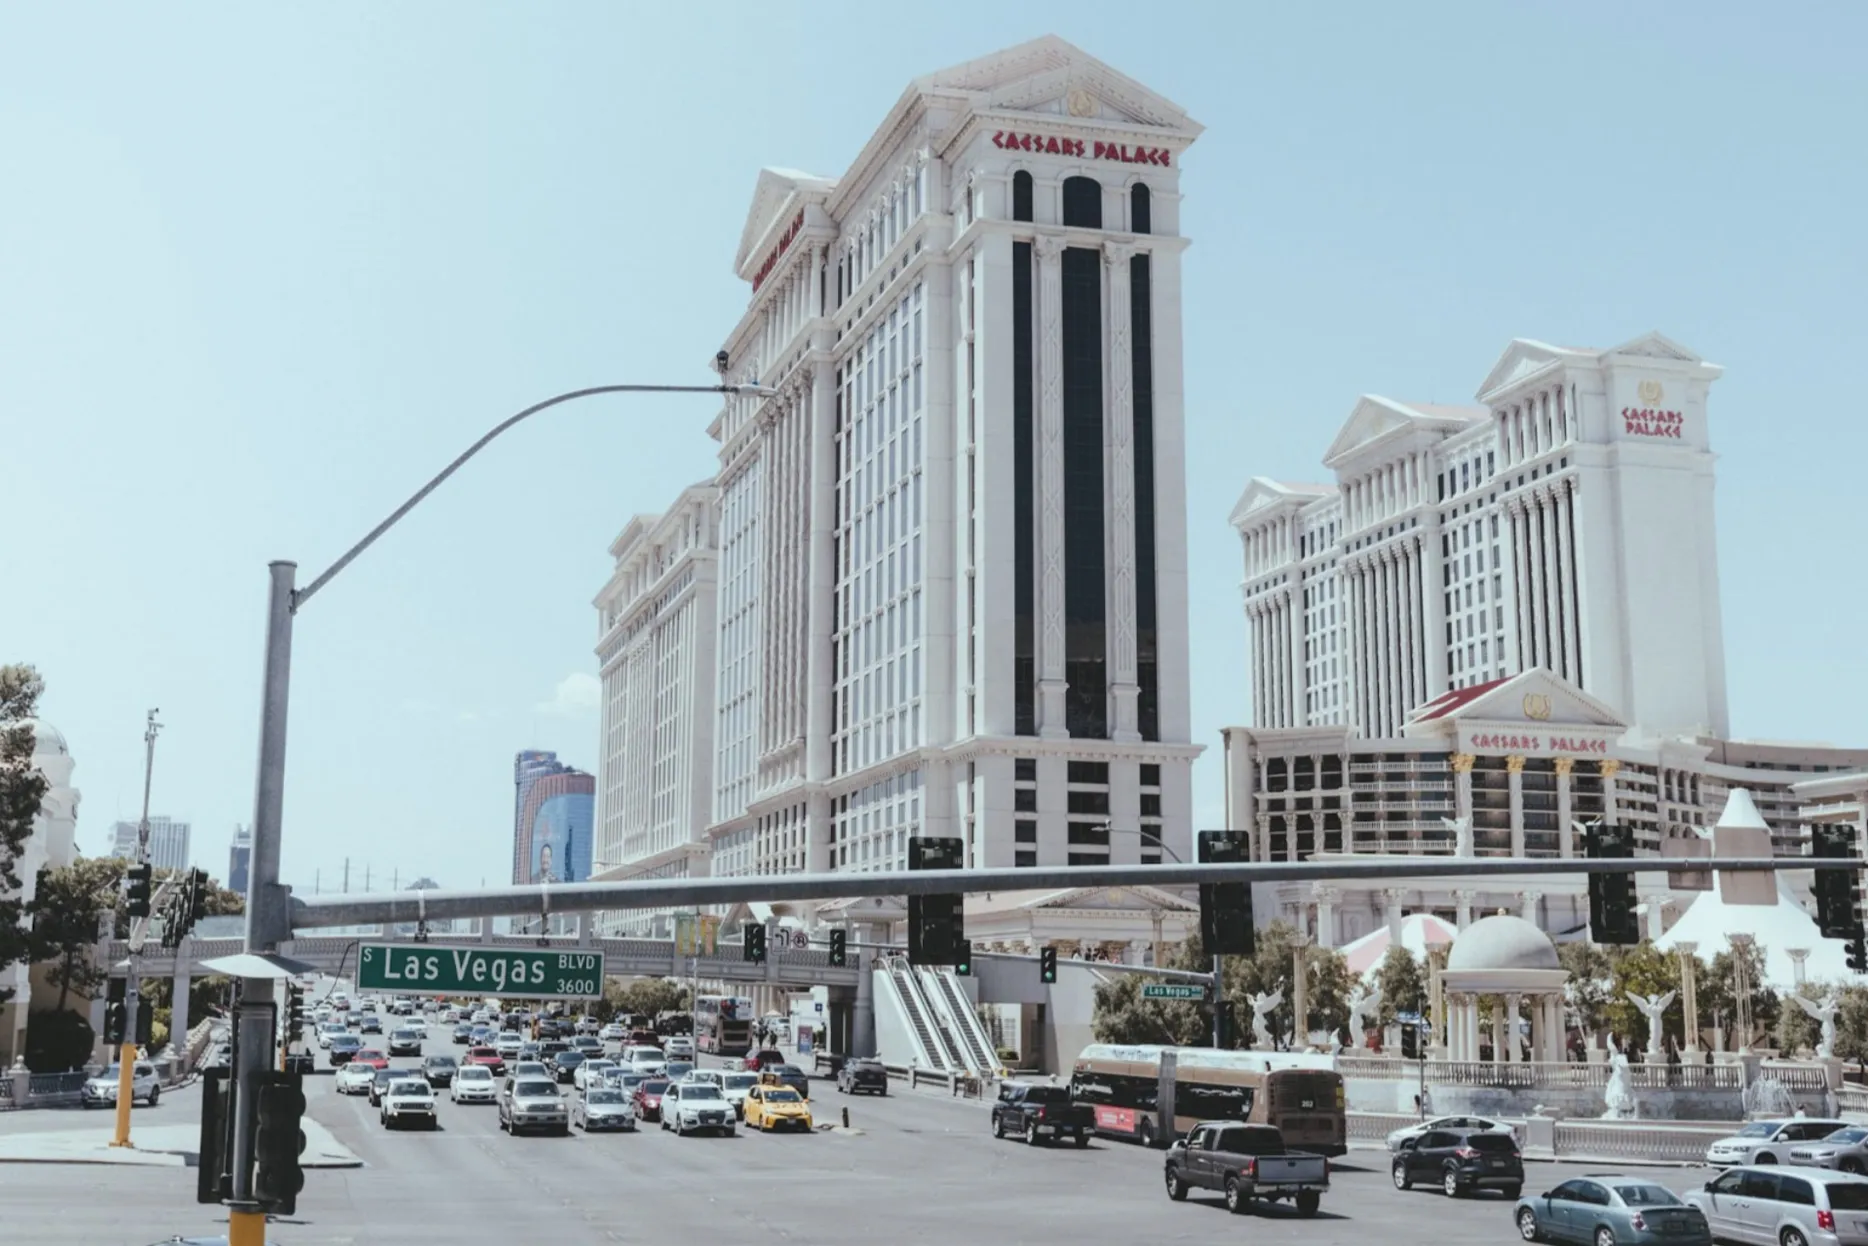 Caesar’s Palace in Las Vegas seen from the main boulevard